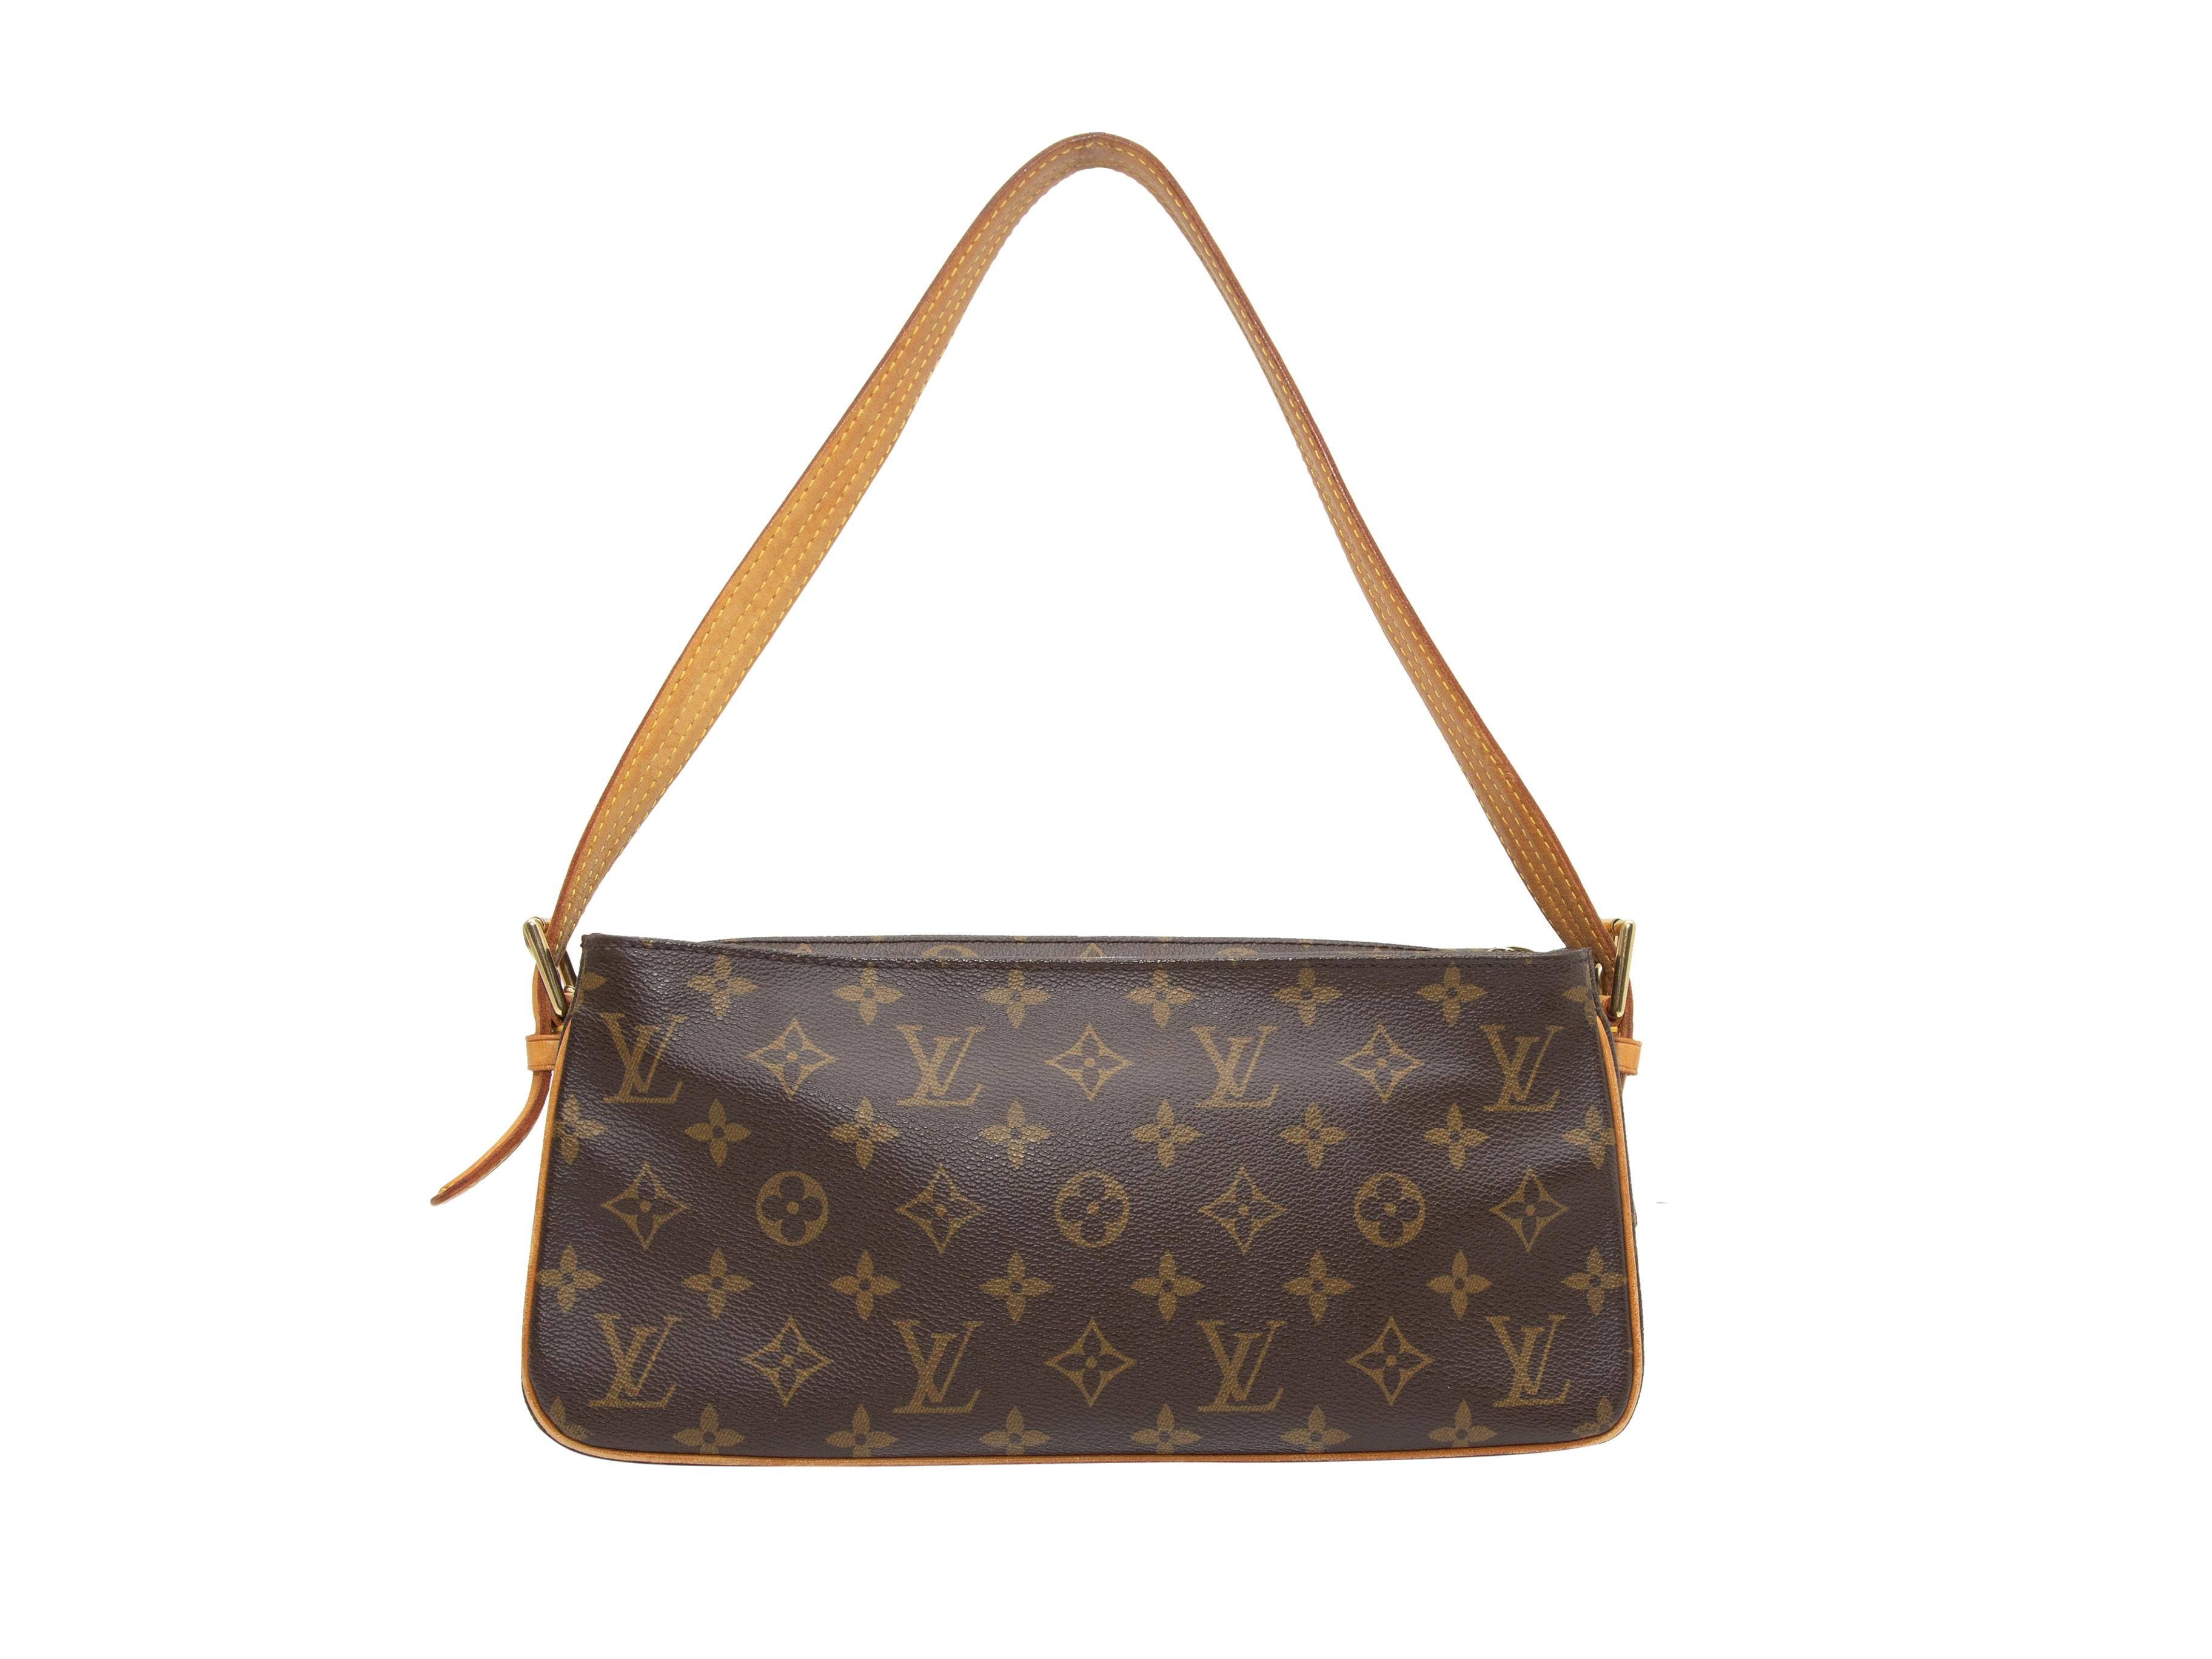 Product details: Brown and tan Monogram Viva Cite MM bag by Louis Vuitton. Single shoulder strap. Dual exterior pockets. Zip closure at top. 12